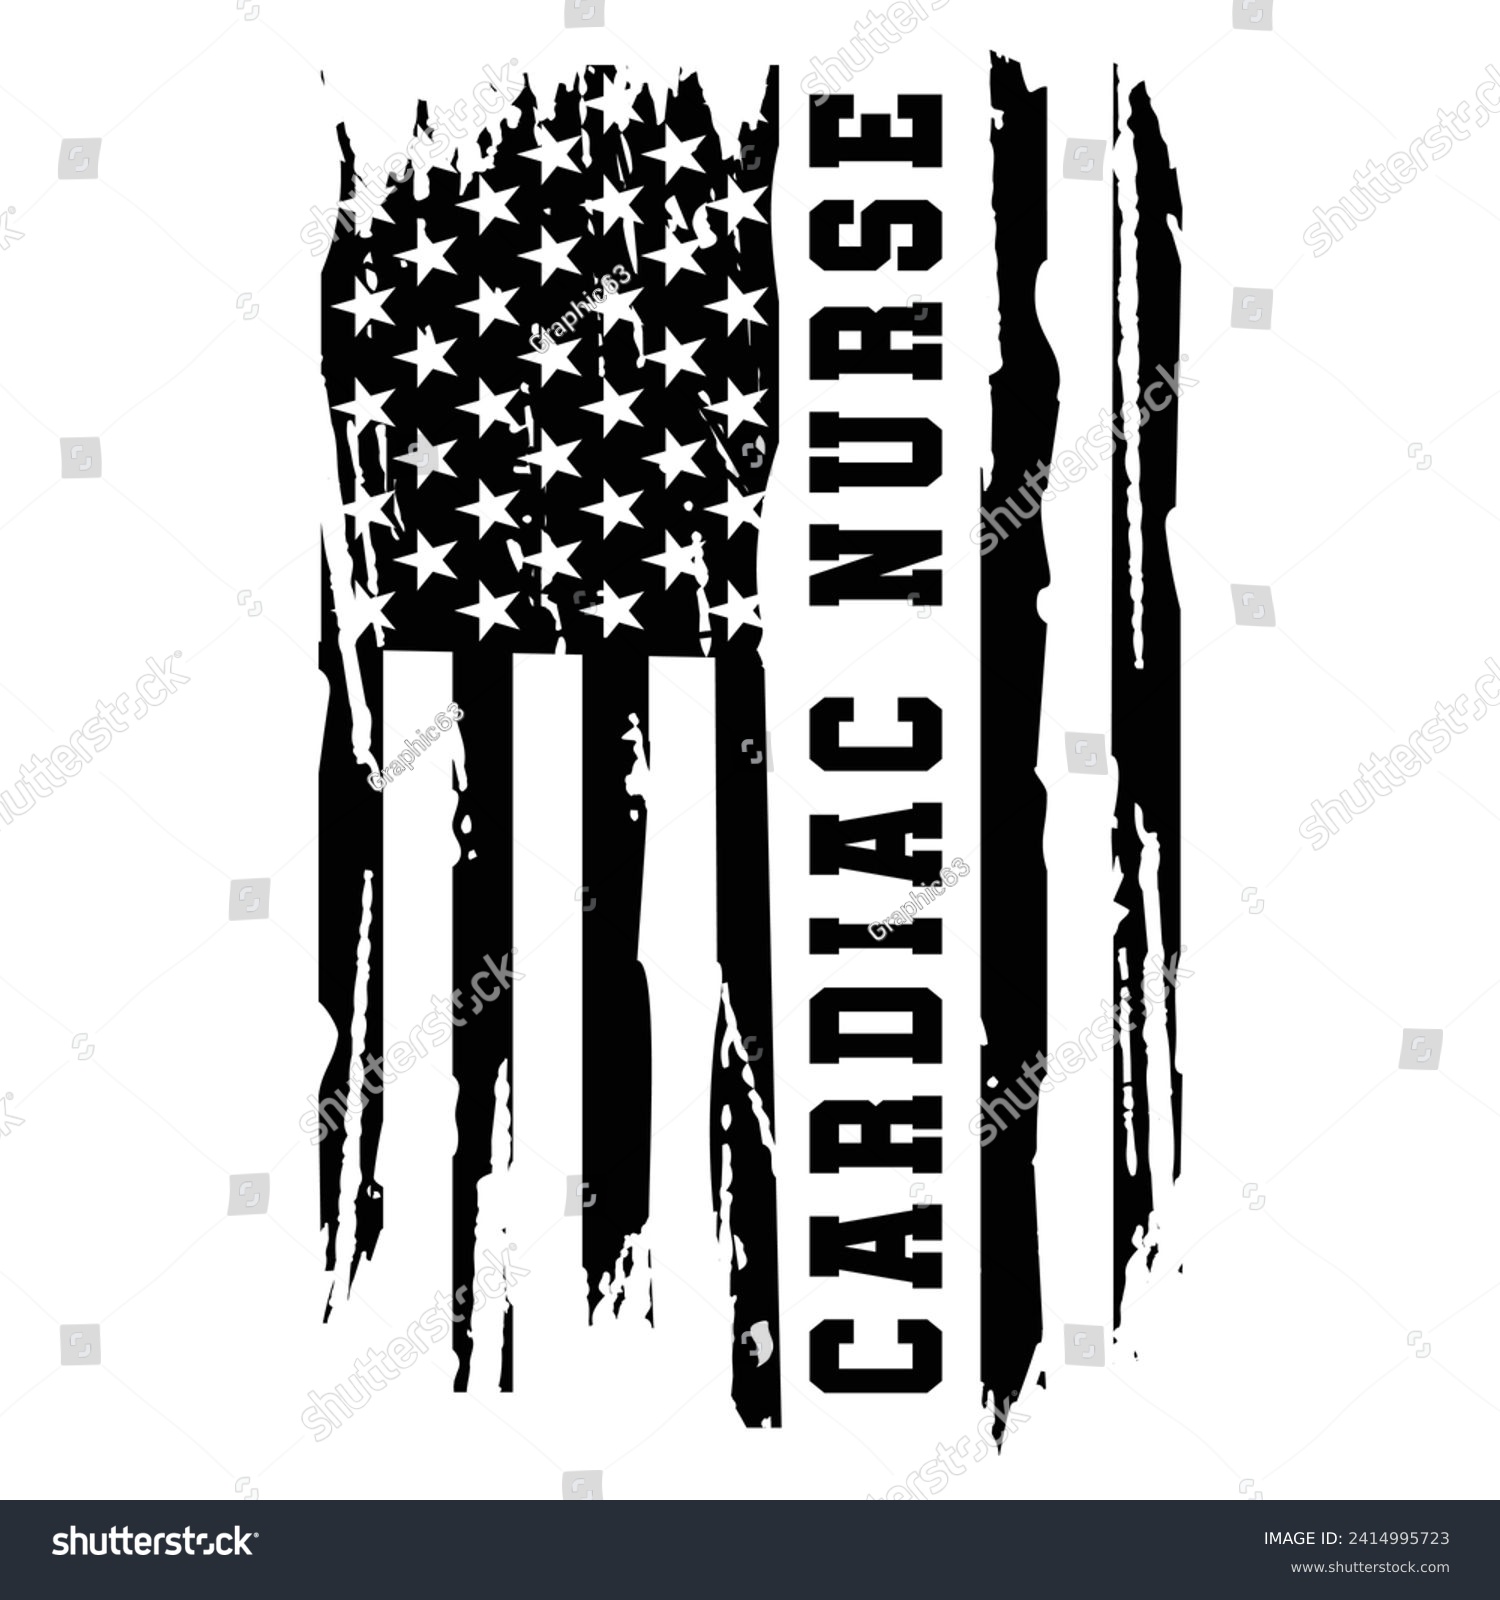 SVG of Distressed Cardiac Nurse American Usa Flag Design For T Shirt Poster Banner Backround Print Vector Eps Illustrations. svg